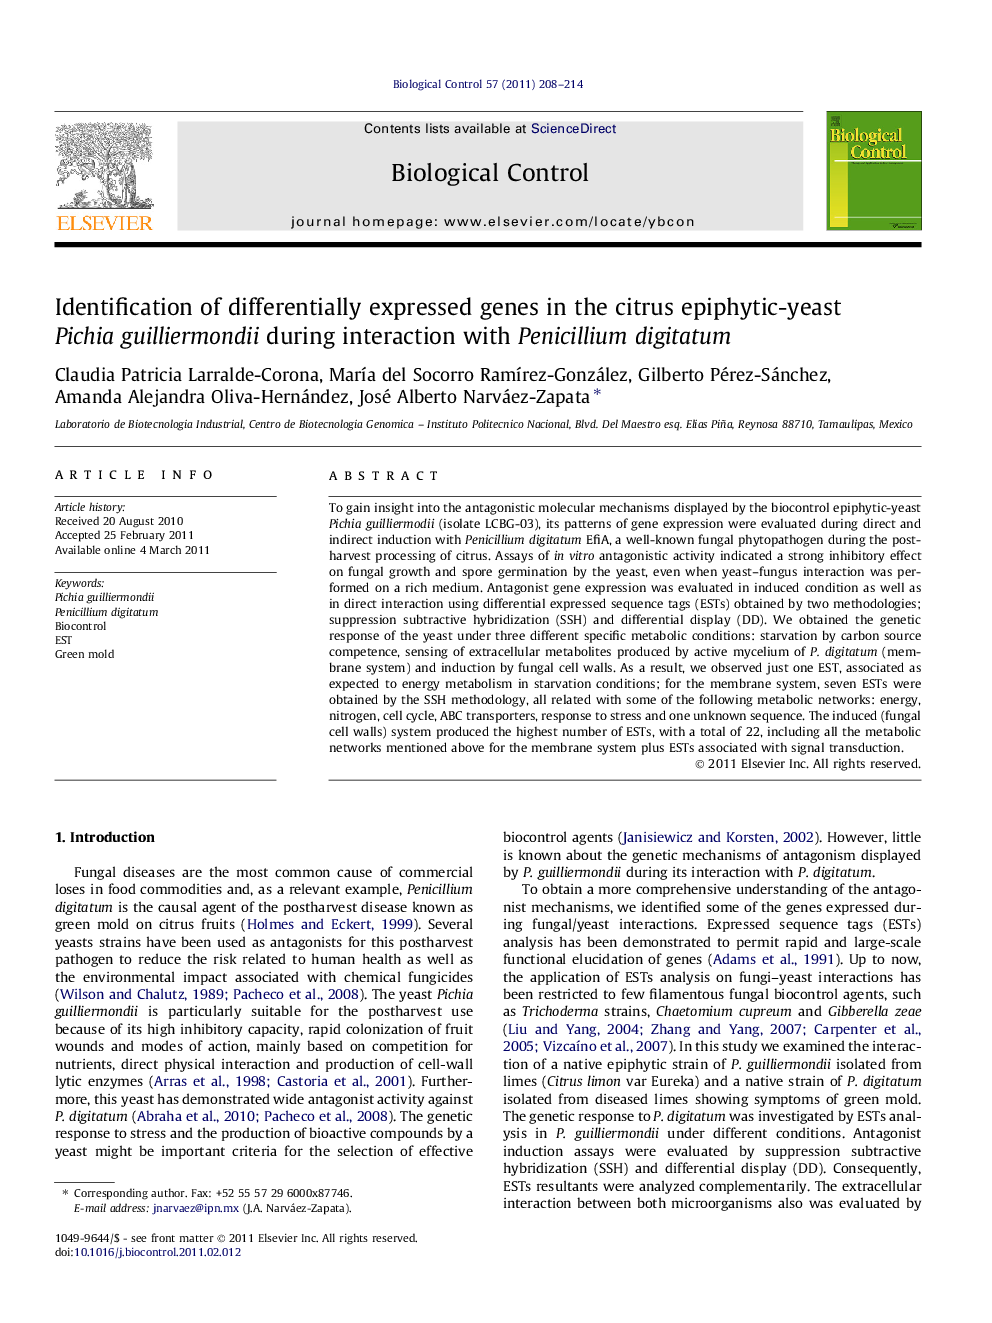 Identification of differentially expressed genes in the citrus epiphytic-yeast Pichia guilliermondii during interaction with Penicillium digitatum